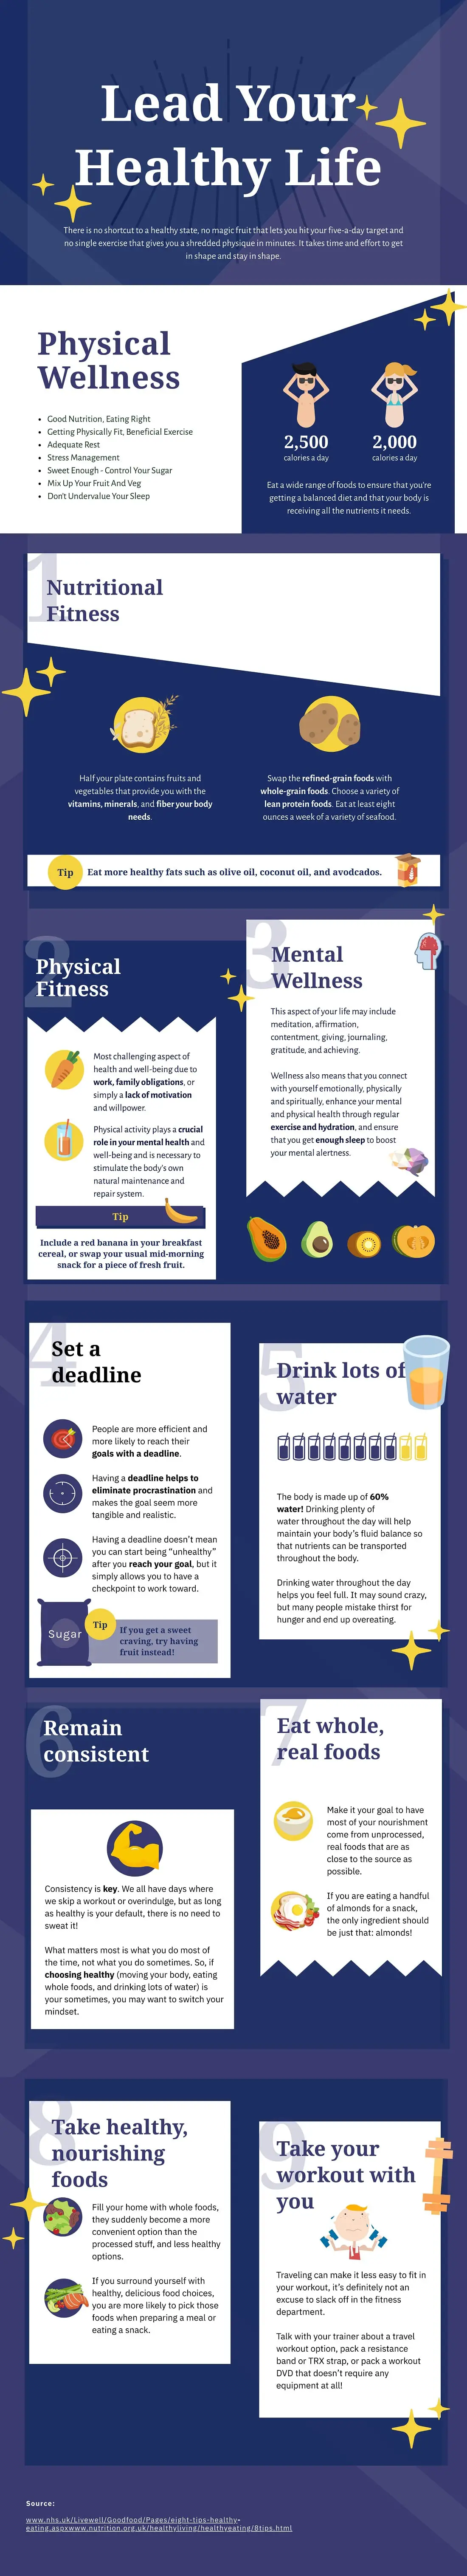 start_healthy_lifesty_-_infographic-min.jpg